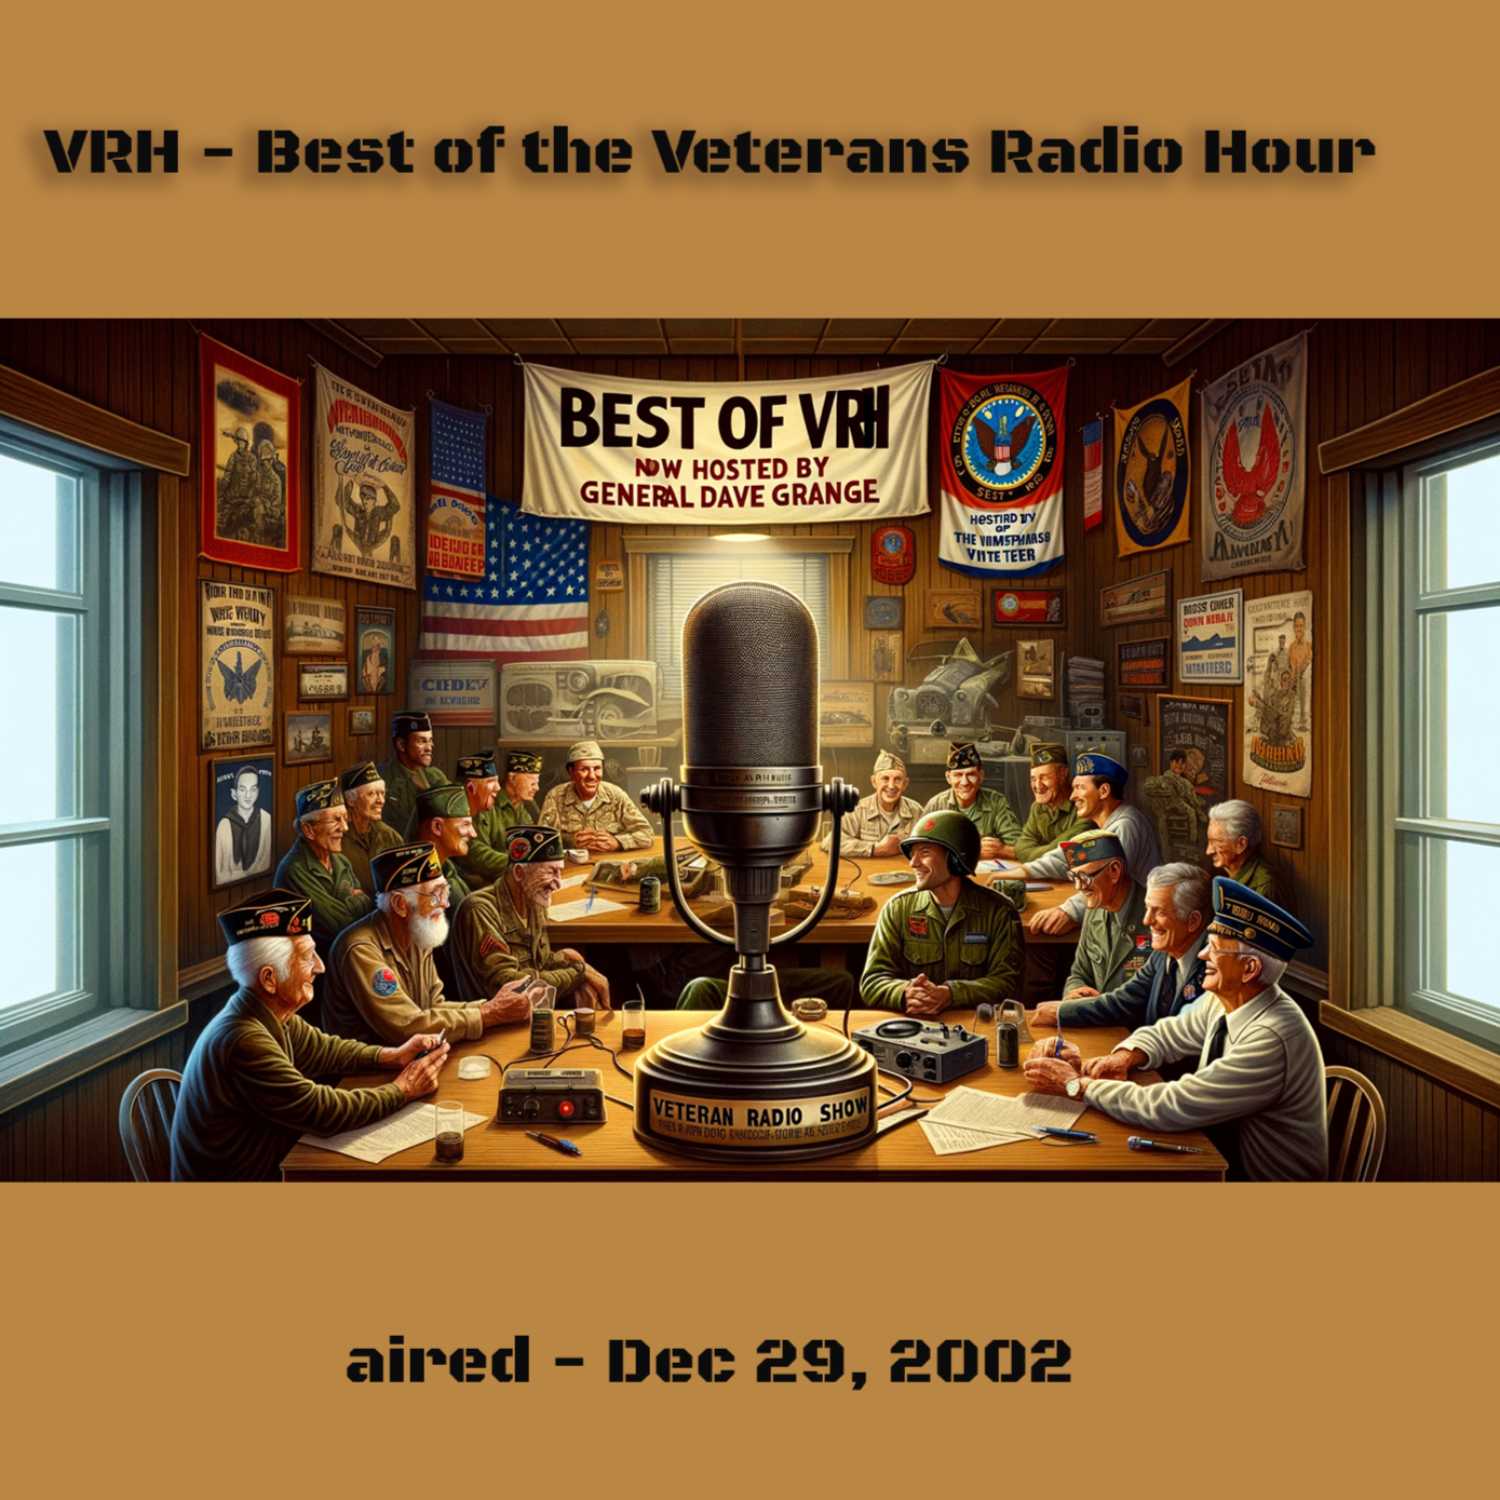 VRH - The best of VRH 2002 - aired Dec 29, 2003